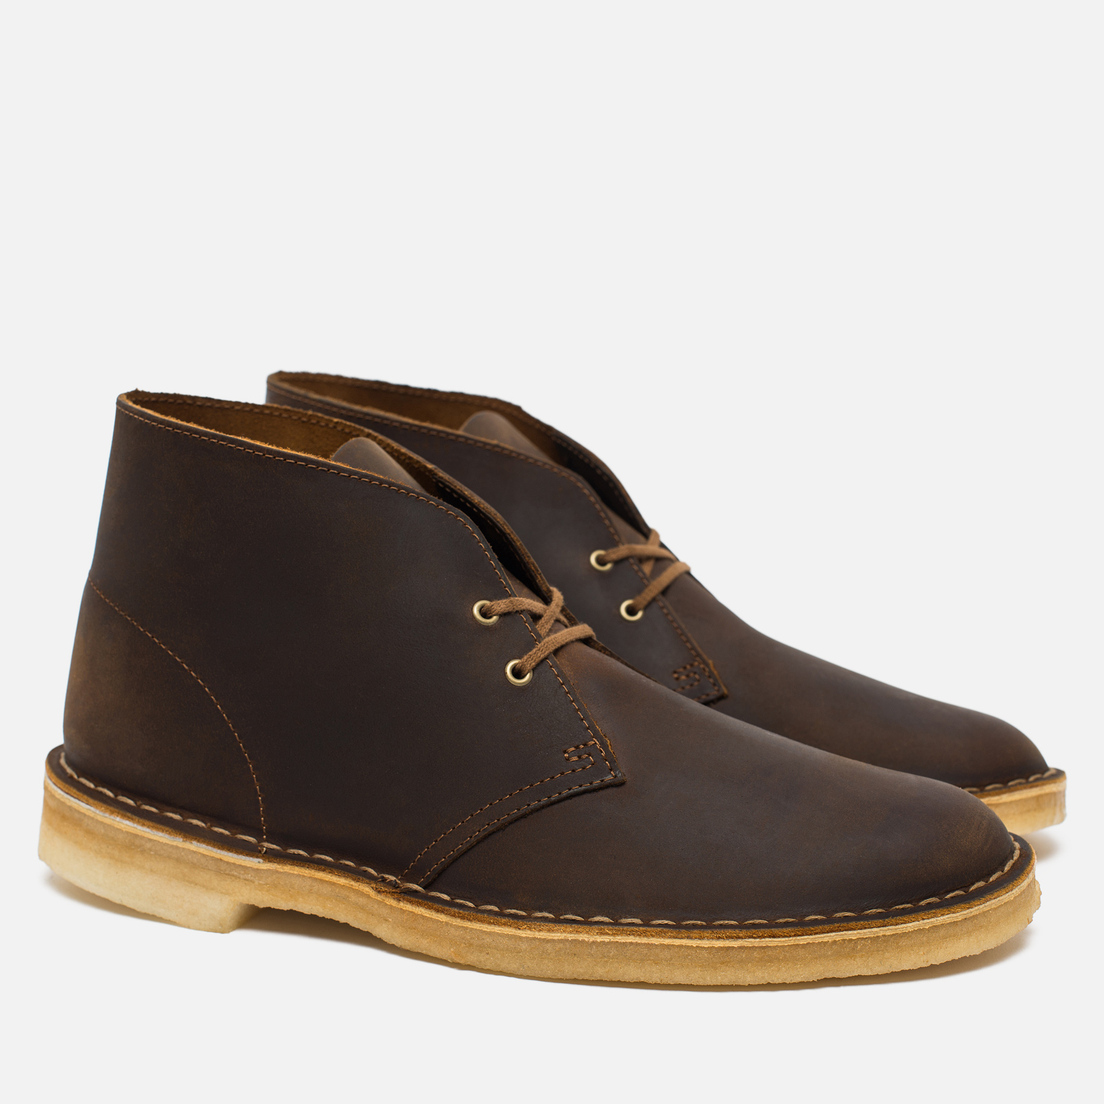 clarks originals desert leather boots beeswax